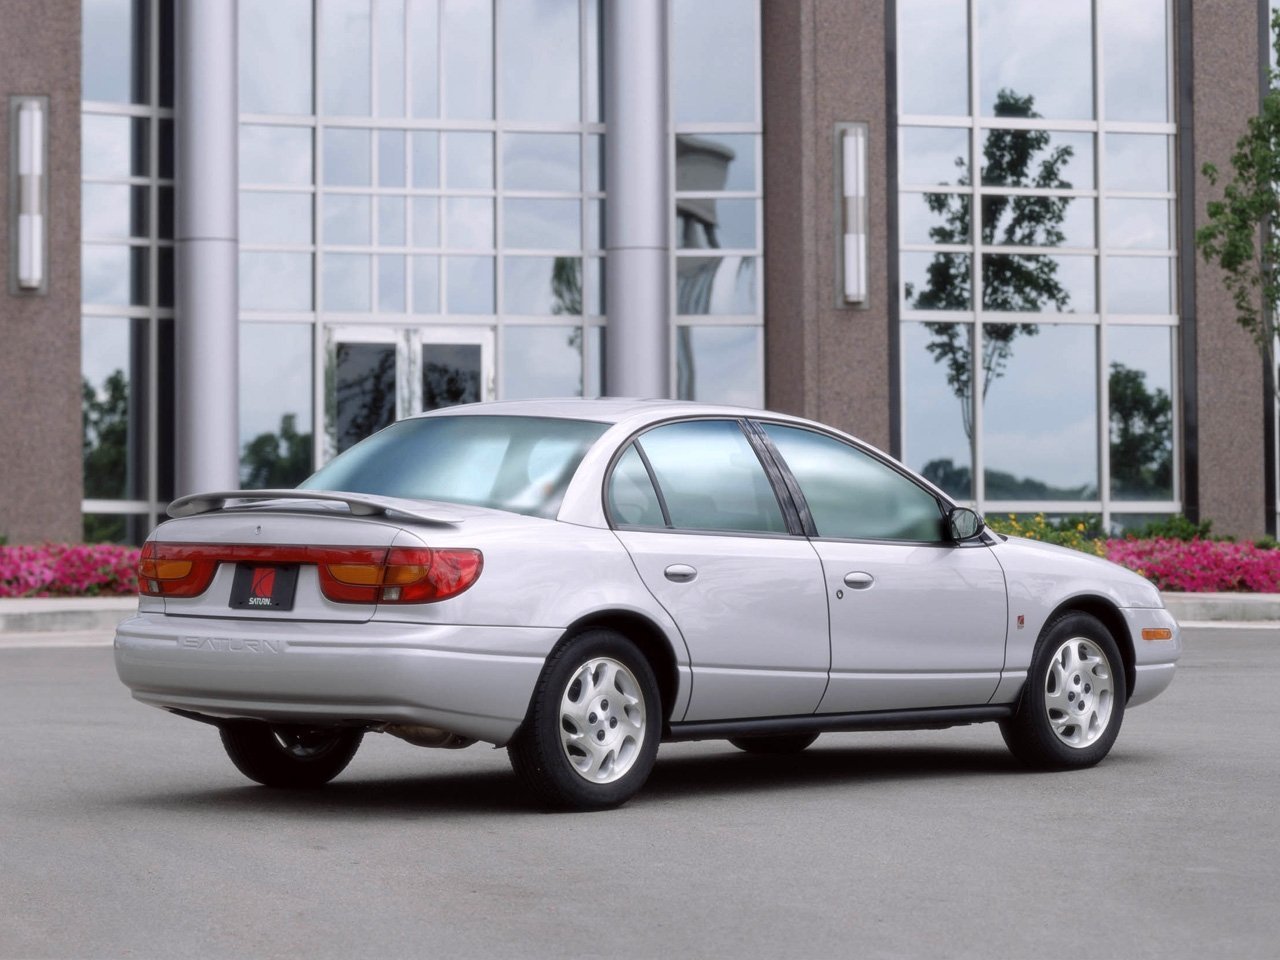 седан Saturn SL 1996 - 2002г выпуска модификация 1.9 AT (100 л.с.)